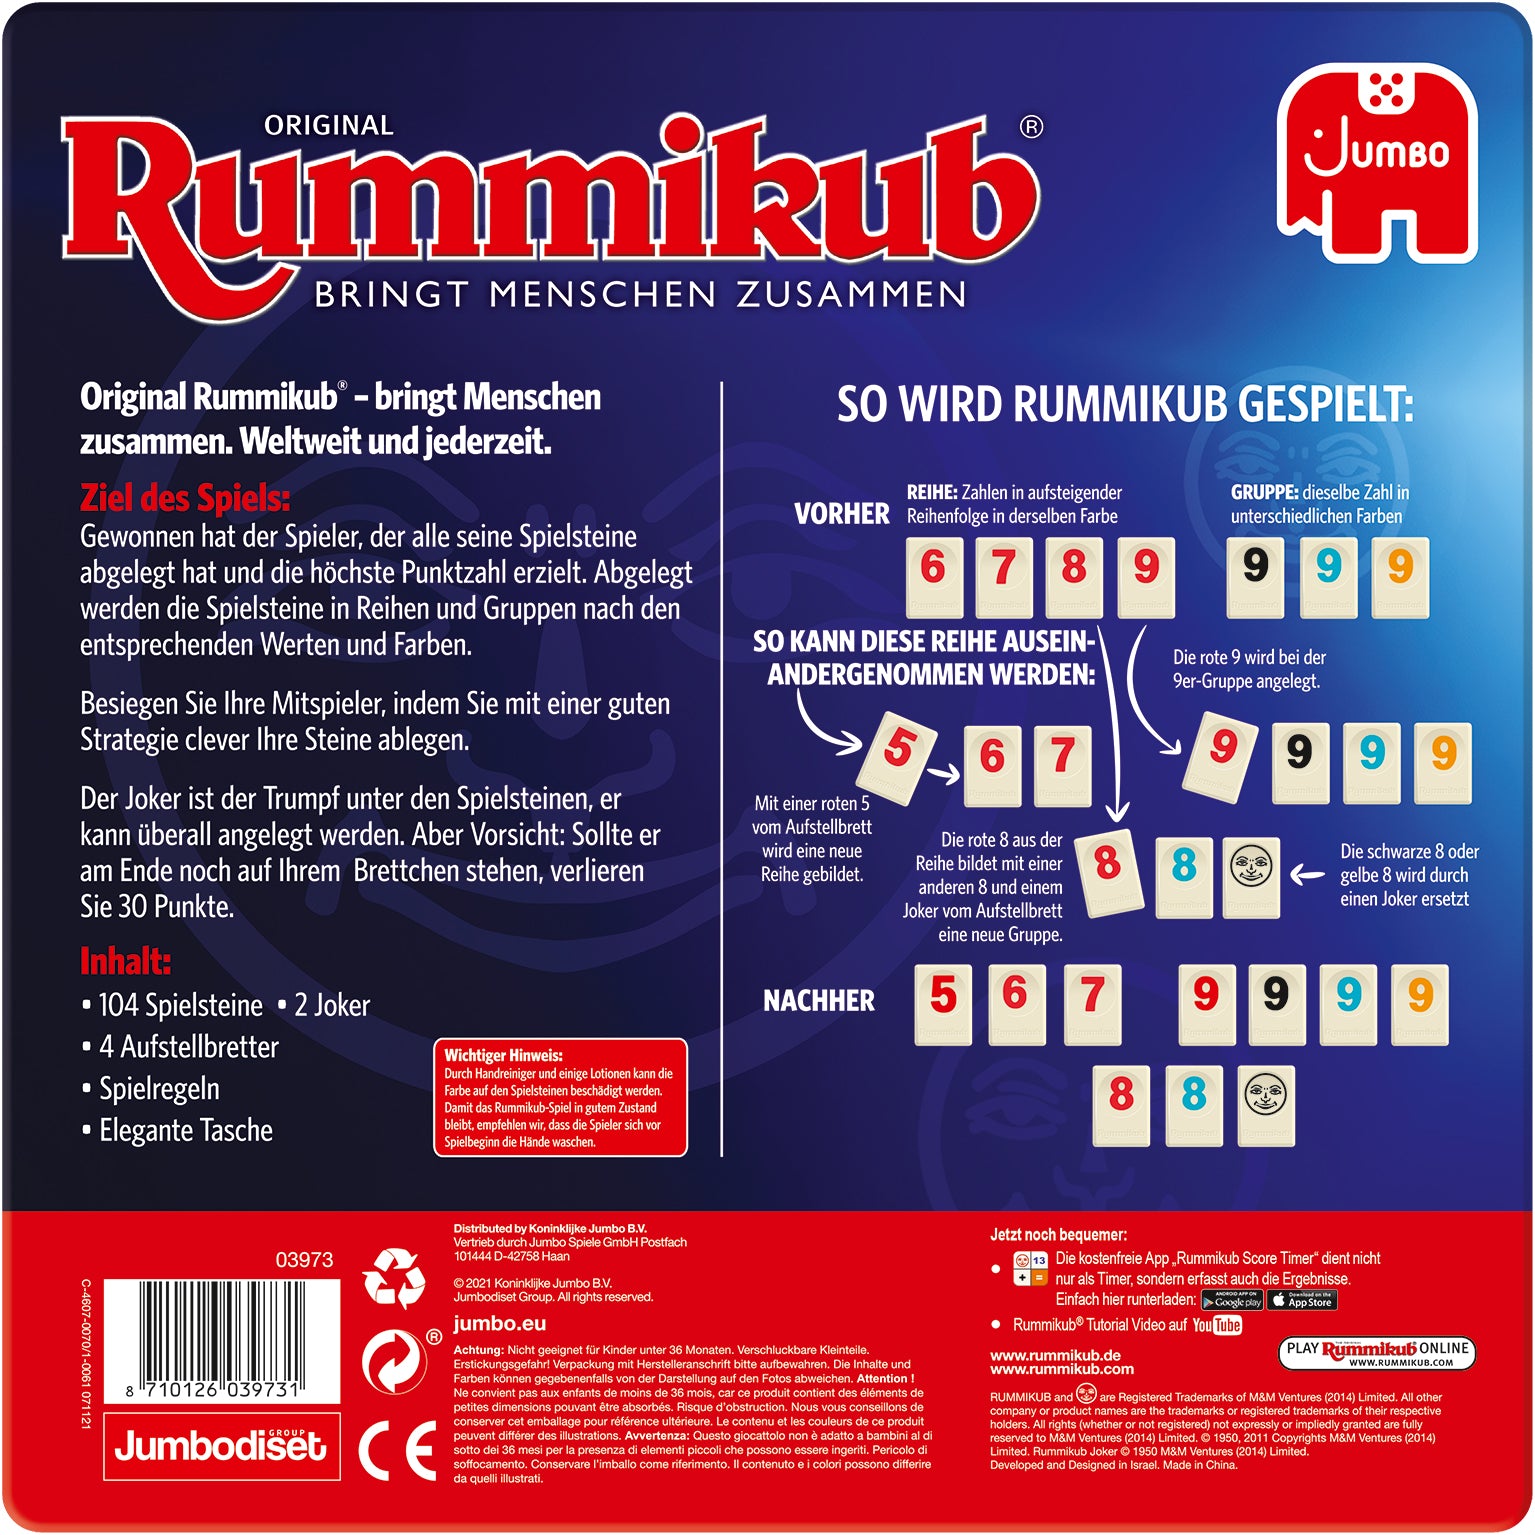 Original Rummikub in Metalldose - product image - Jumboplay.com